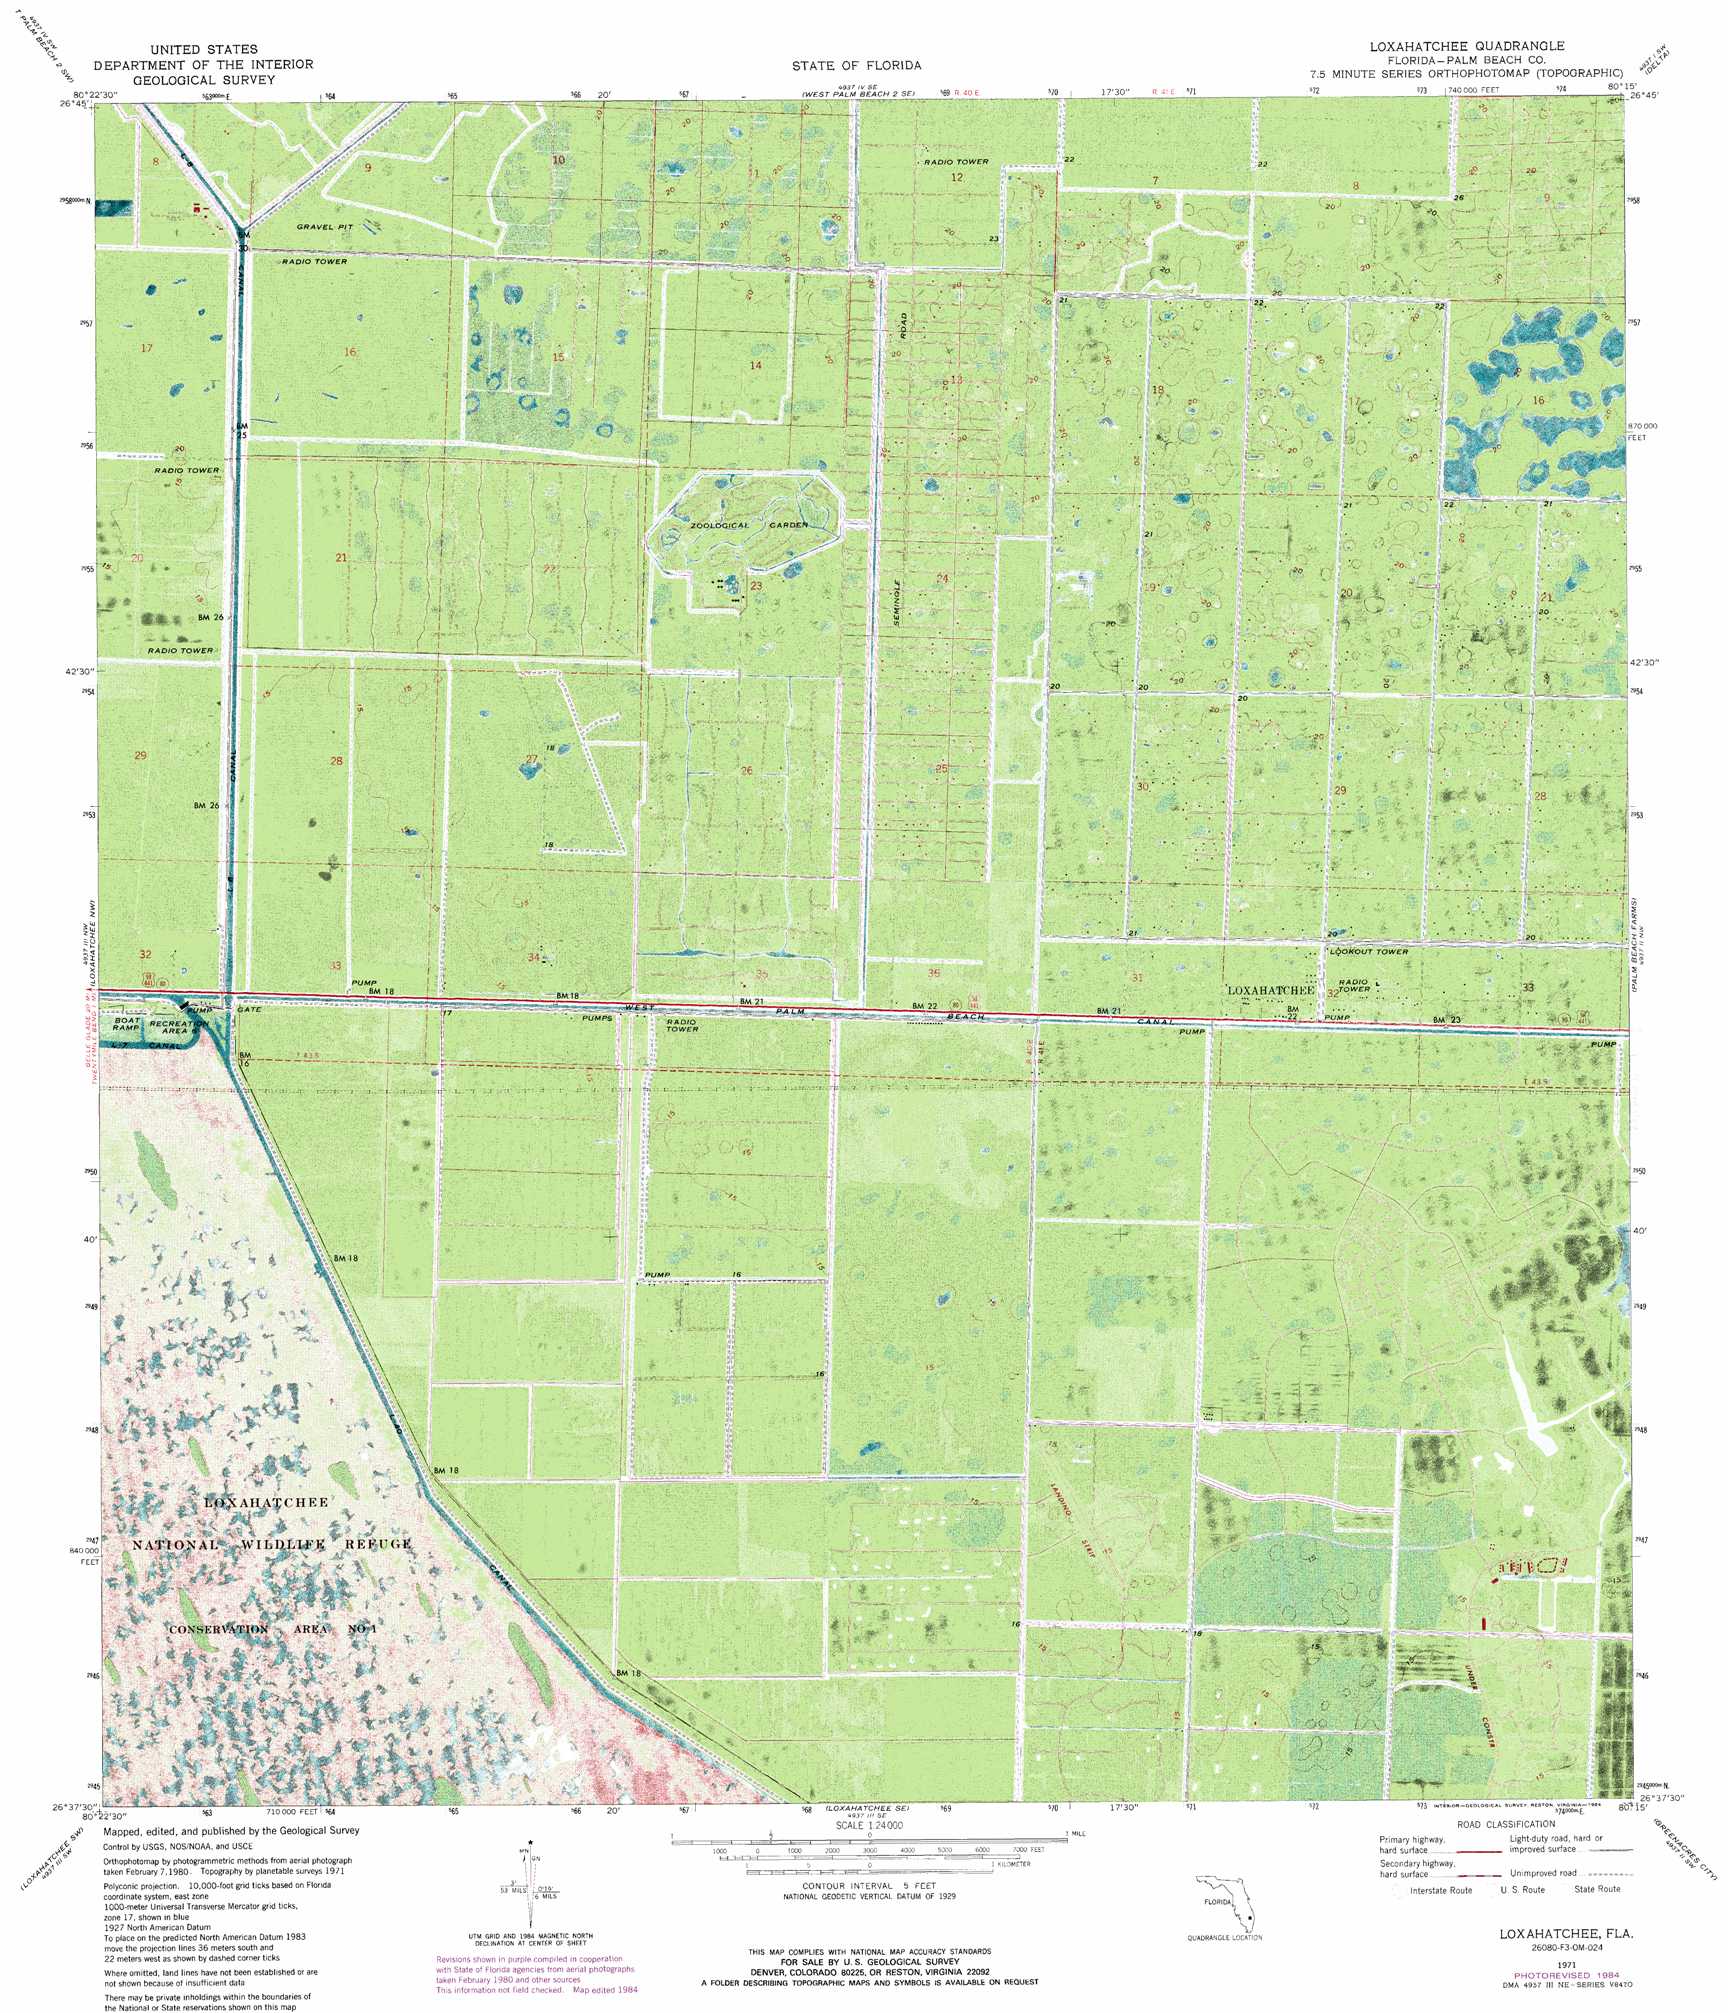 Loxahatchee topographic map, FL - USGS Topo Quad 26080f3